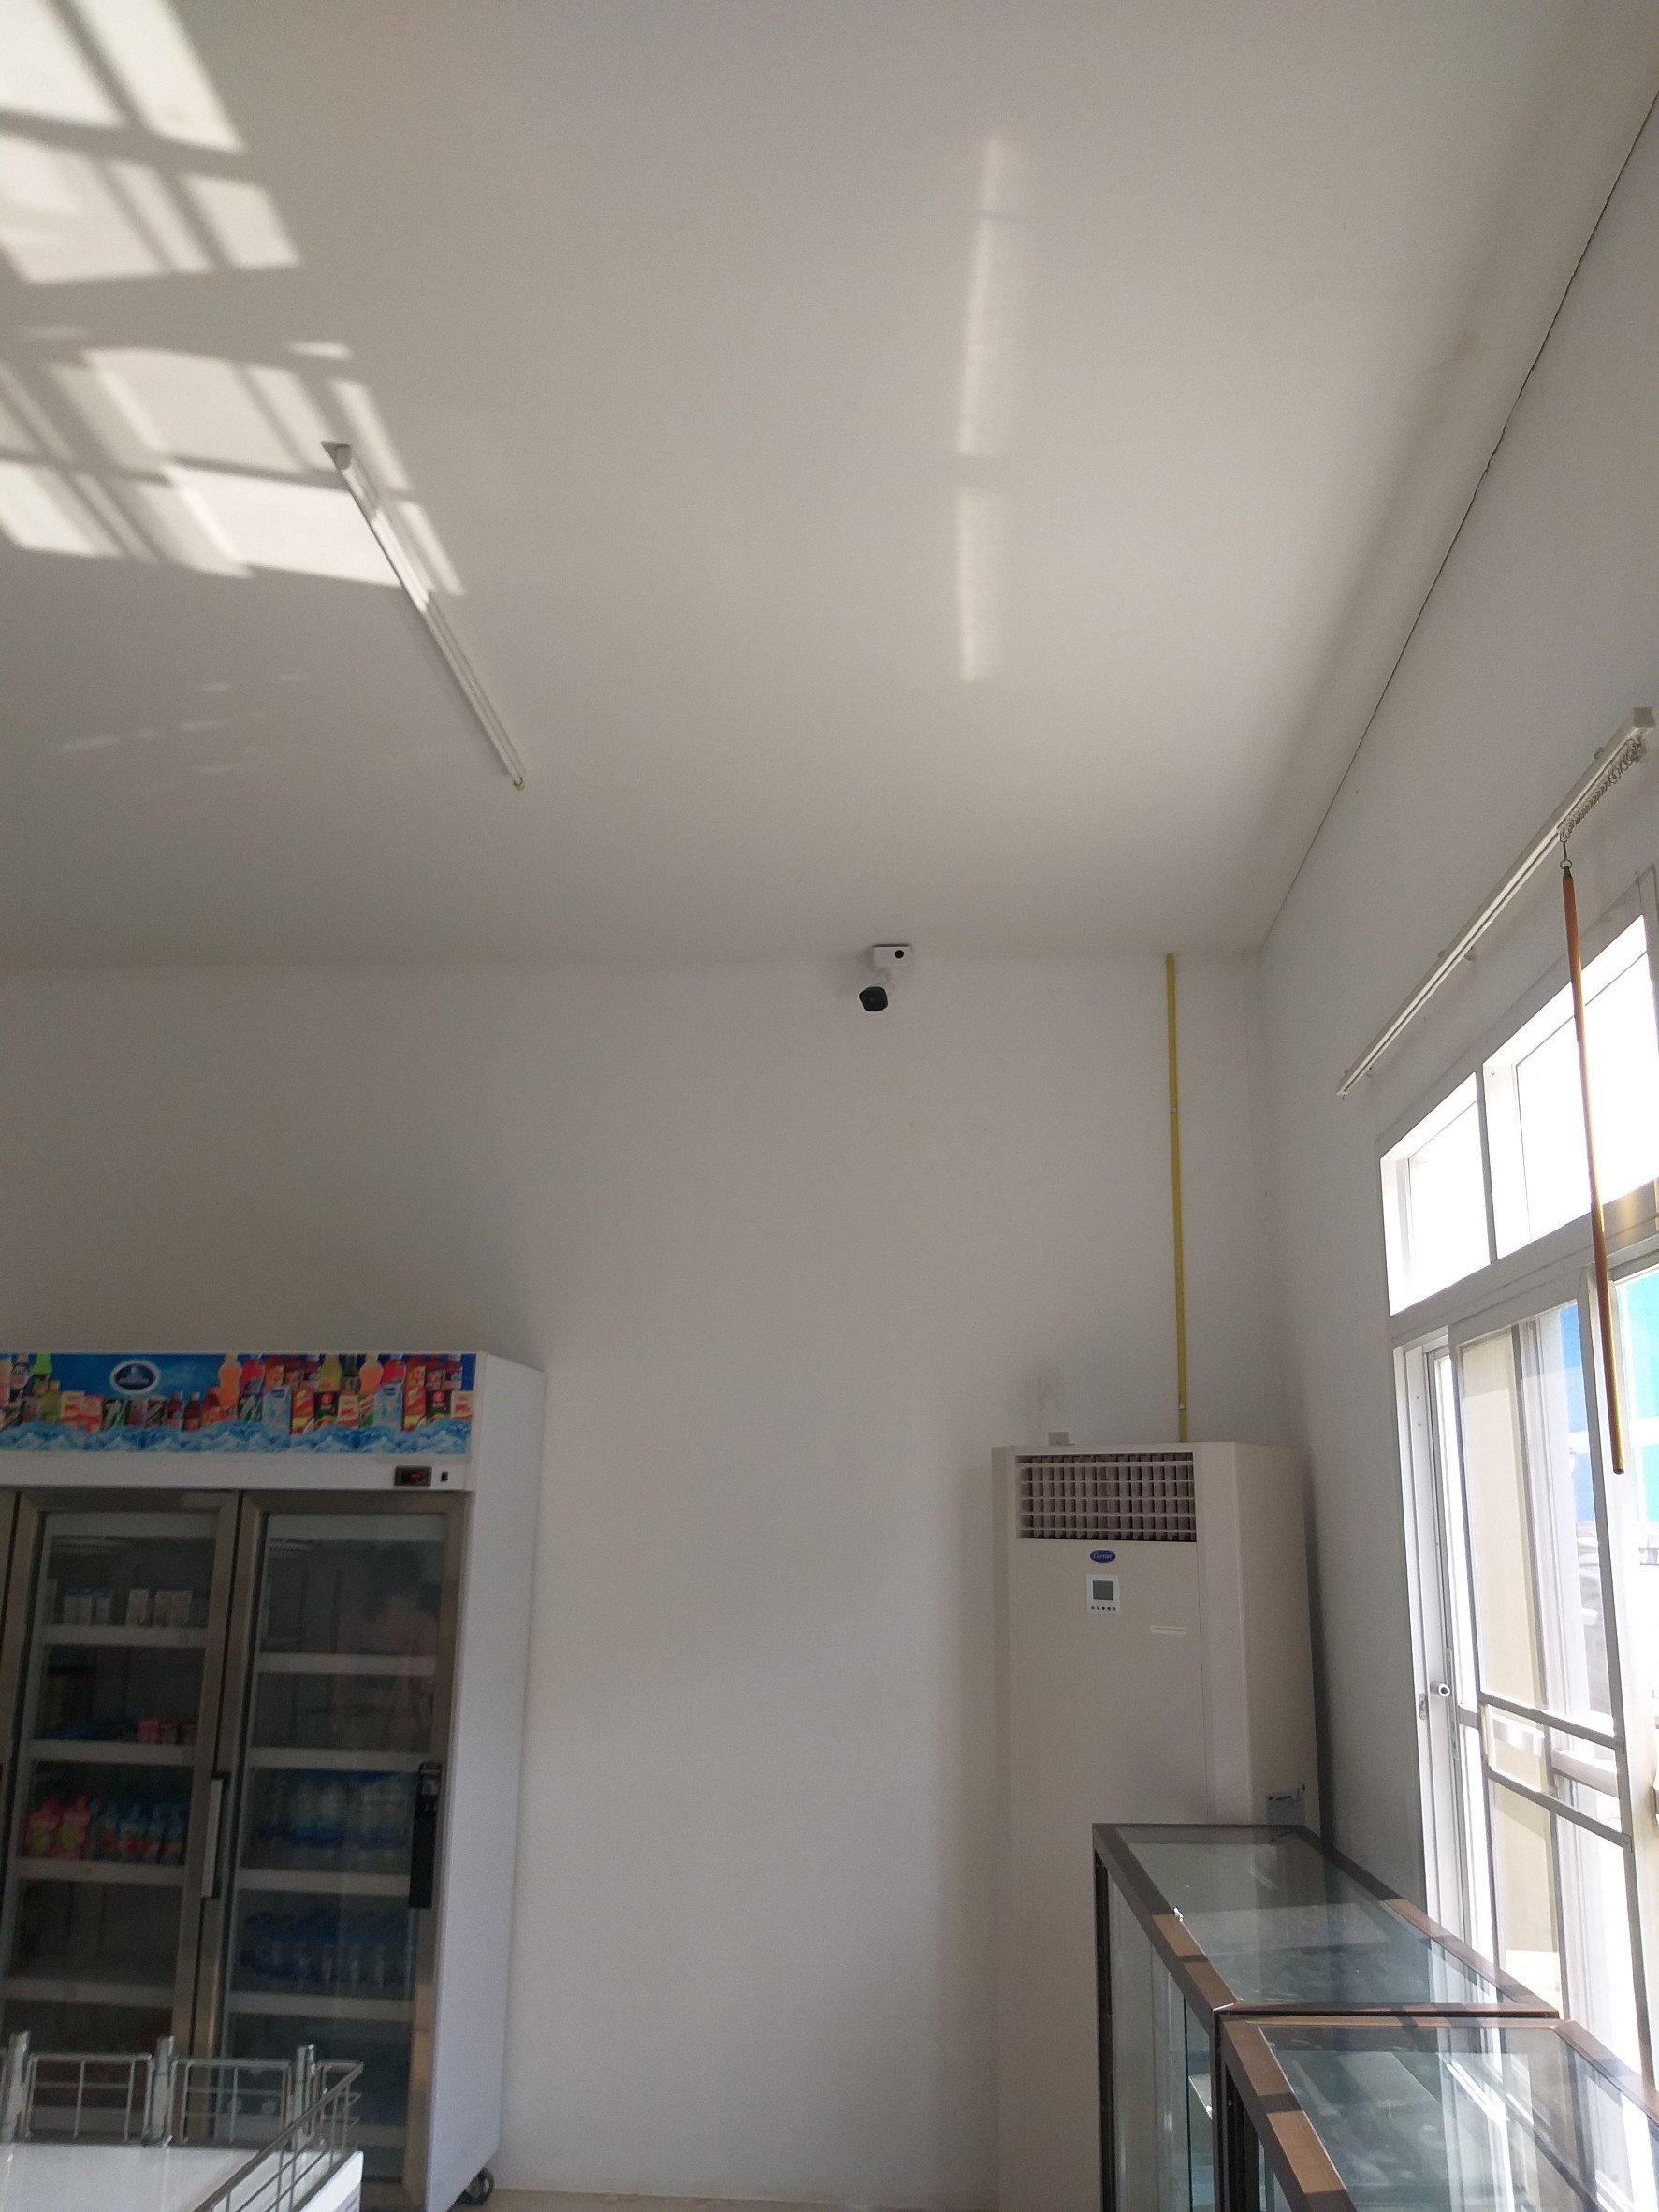 CCTV โรงเรียน